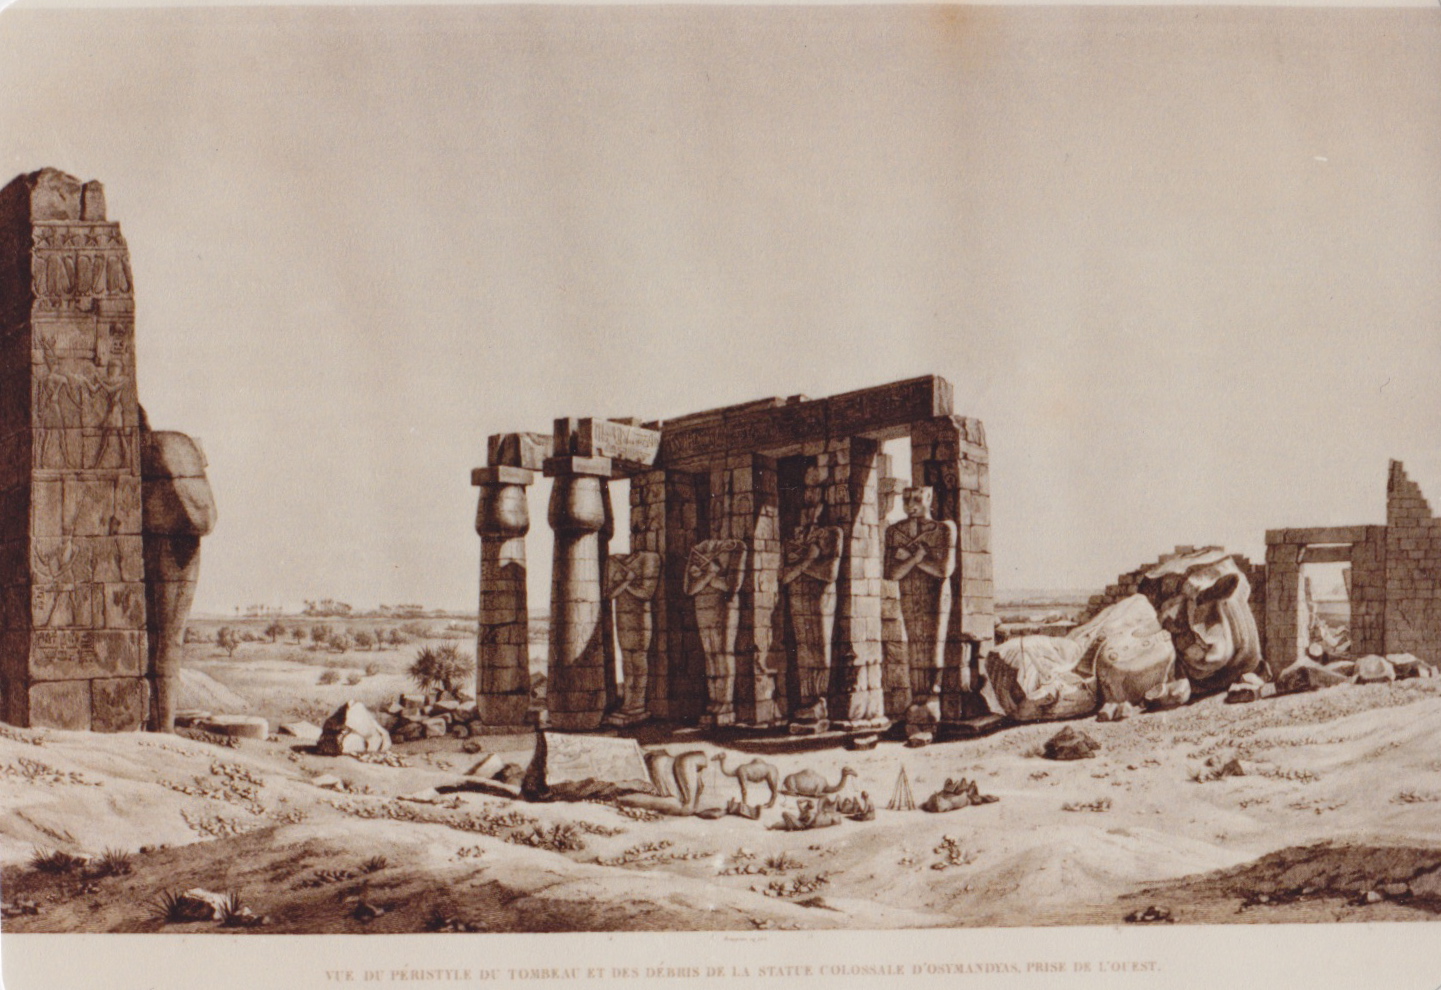 Simon's Blog: Luxor, Egypt. Then and Now